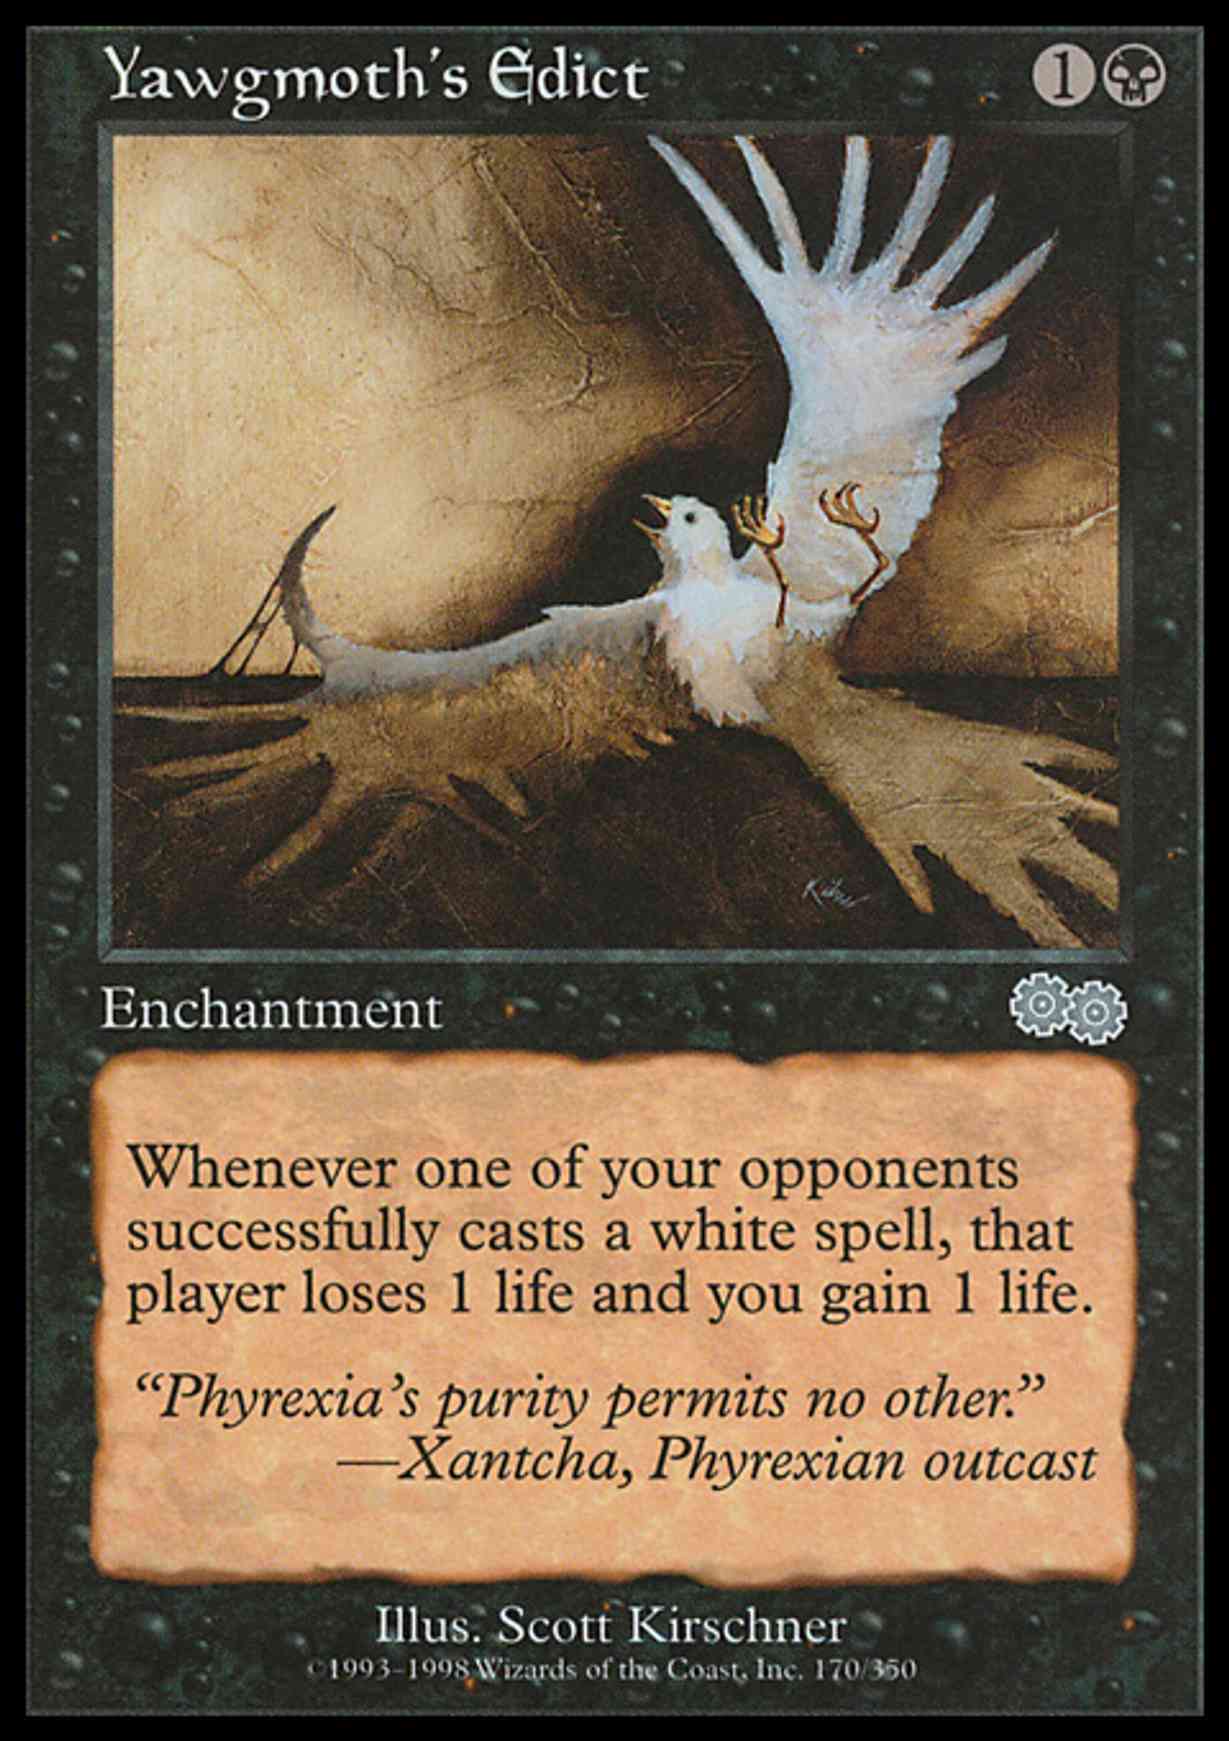 Yawgmoth's Edict magic card front